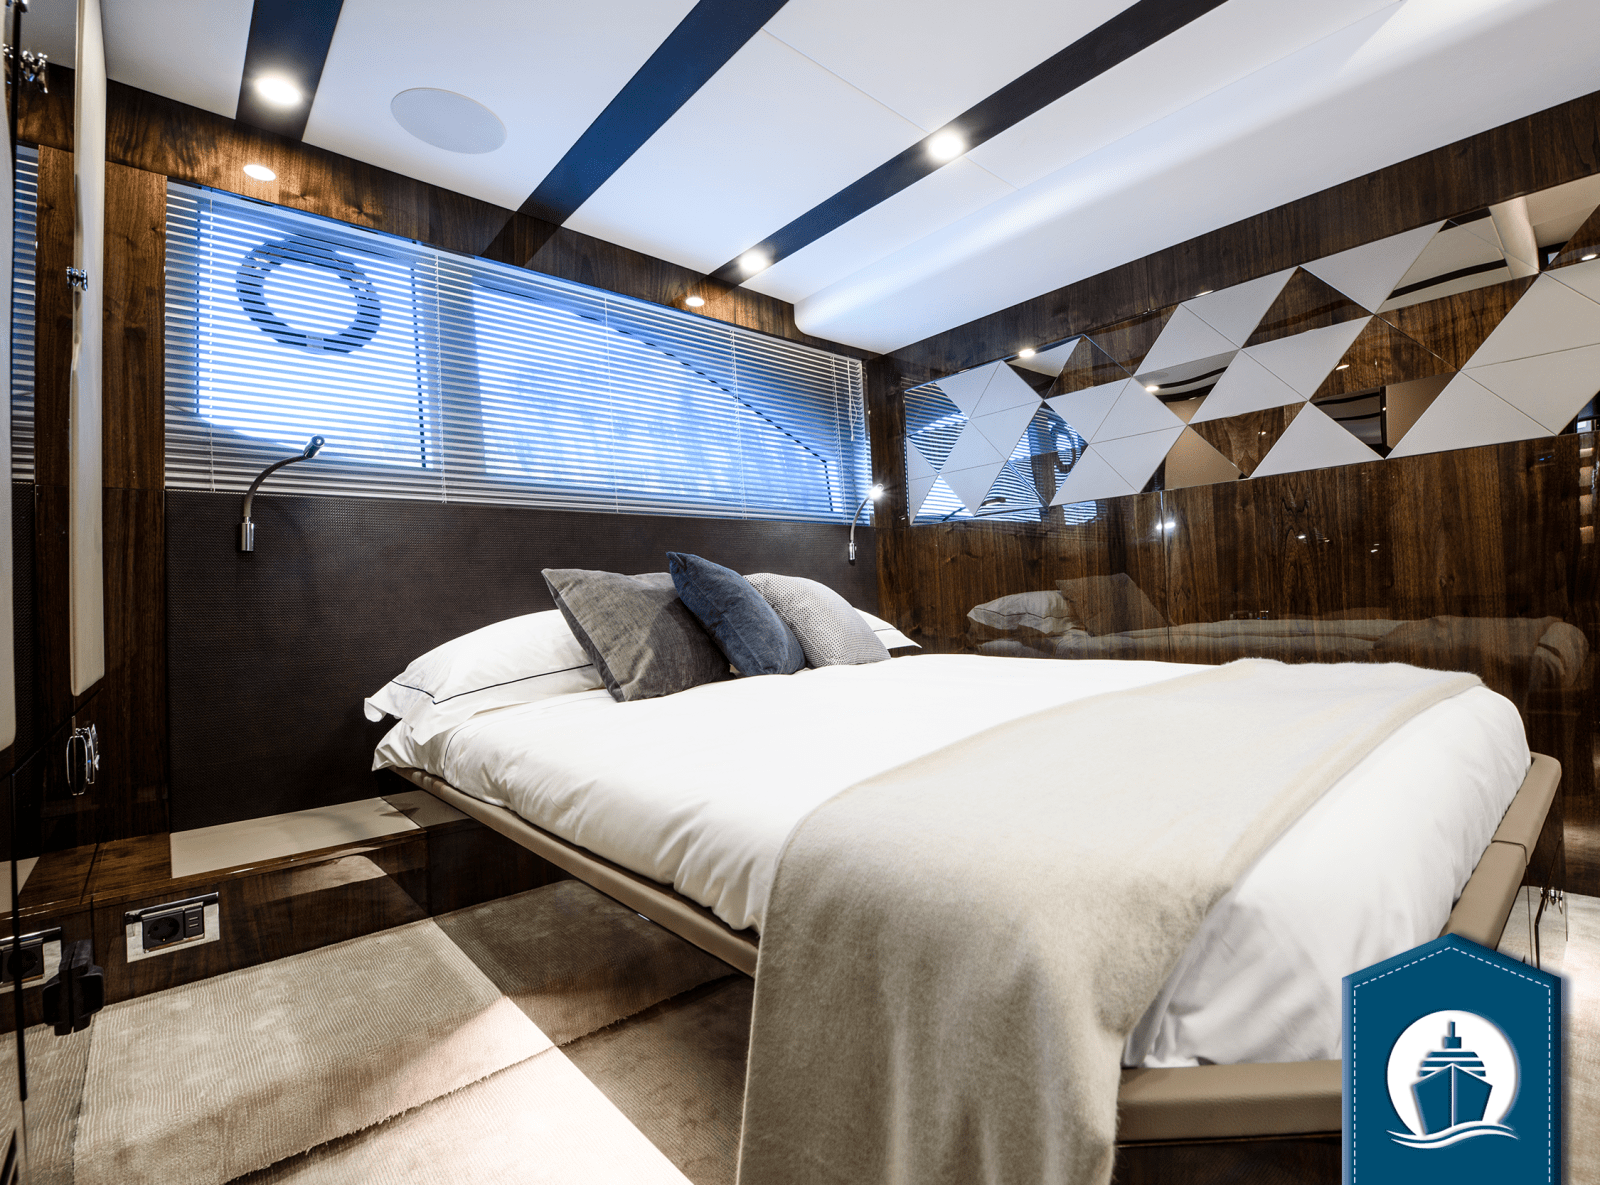 solarglide aluminium Venetian blinds installed in luxury Yacht bedroom